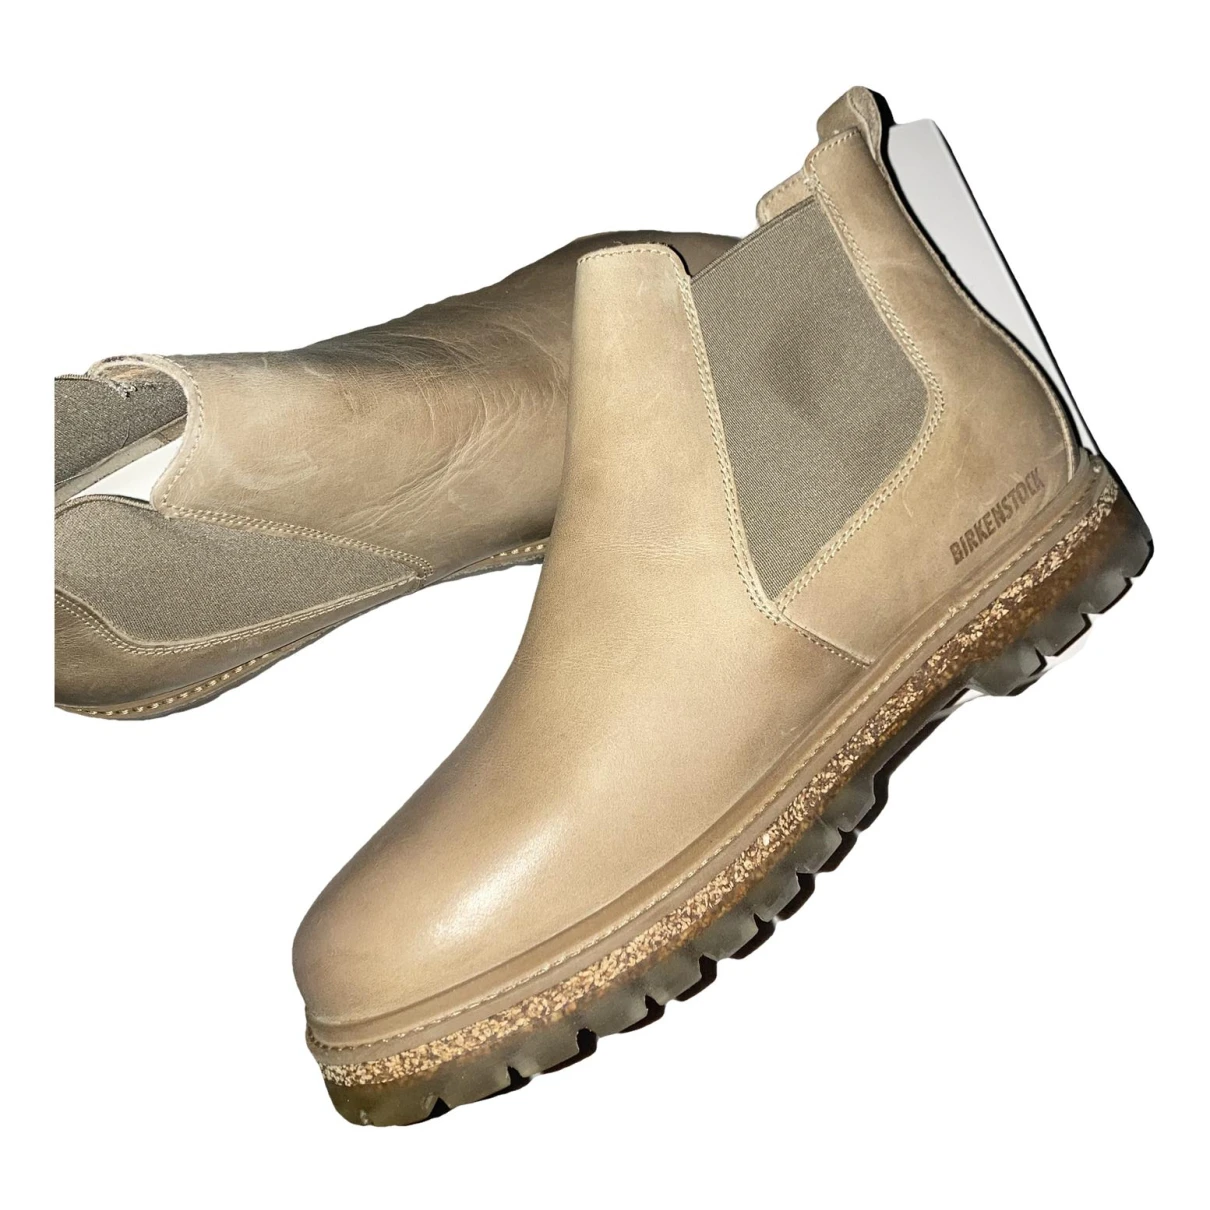 Pre-owned Birkenstock Leather Boots In Beige